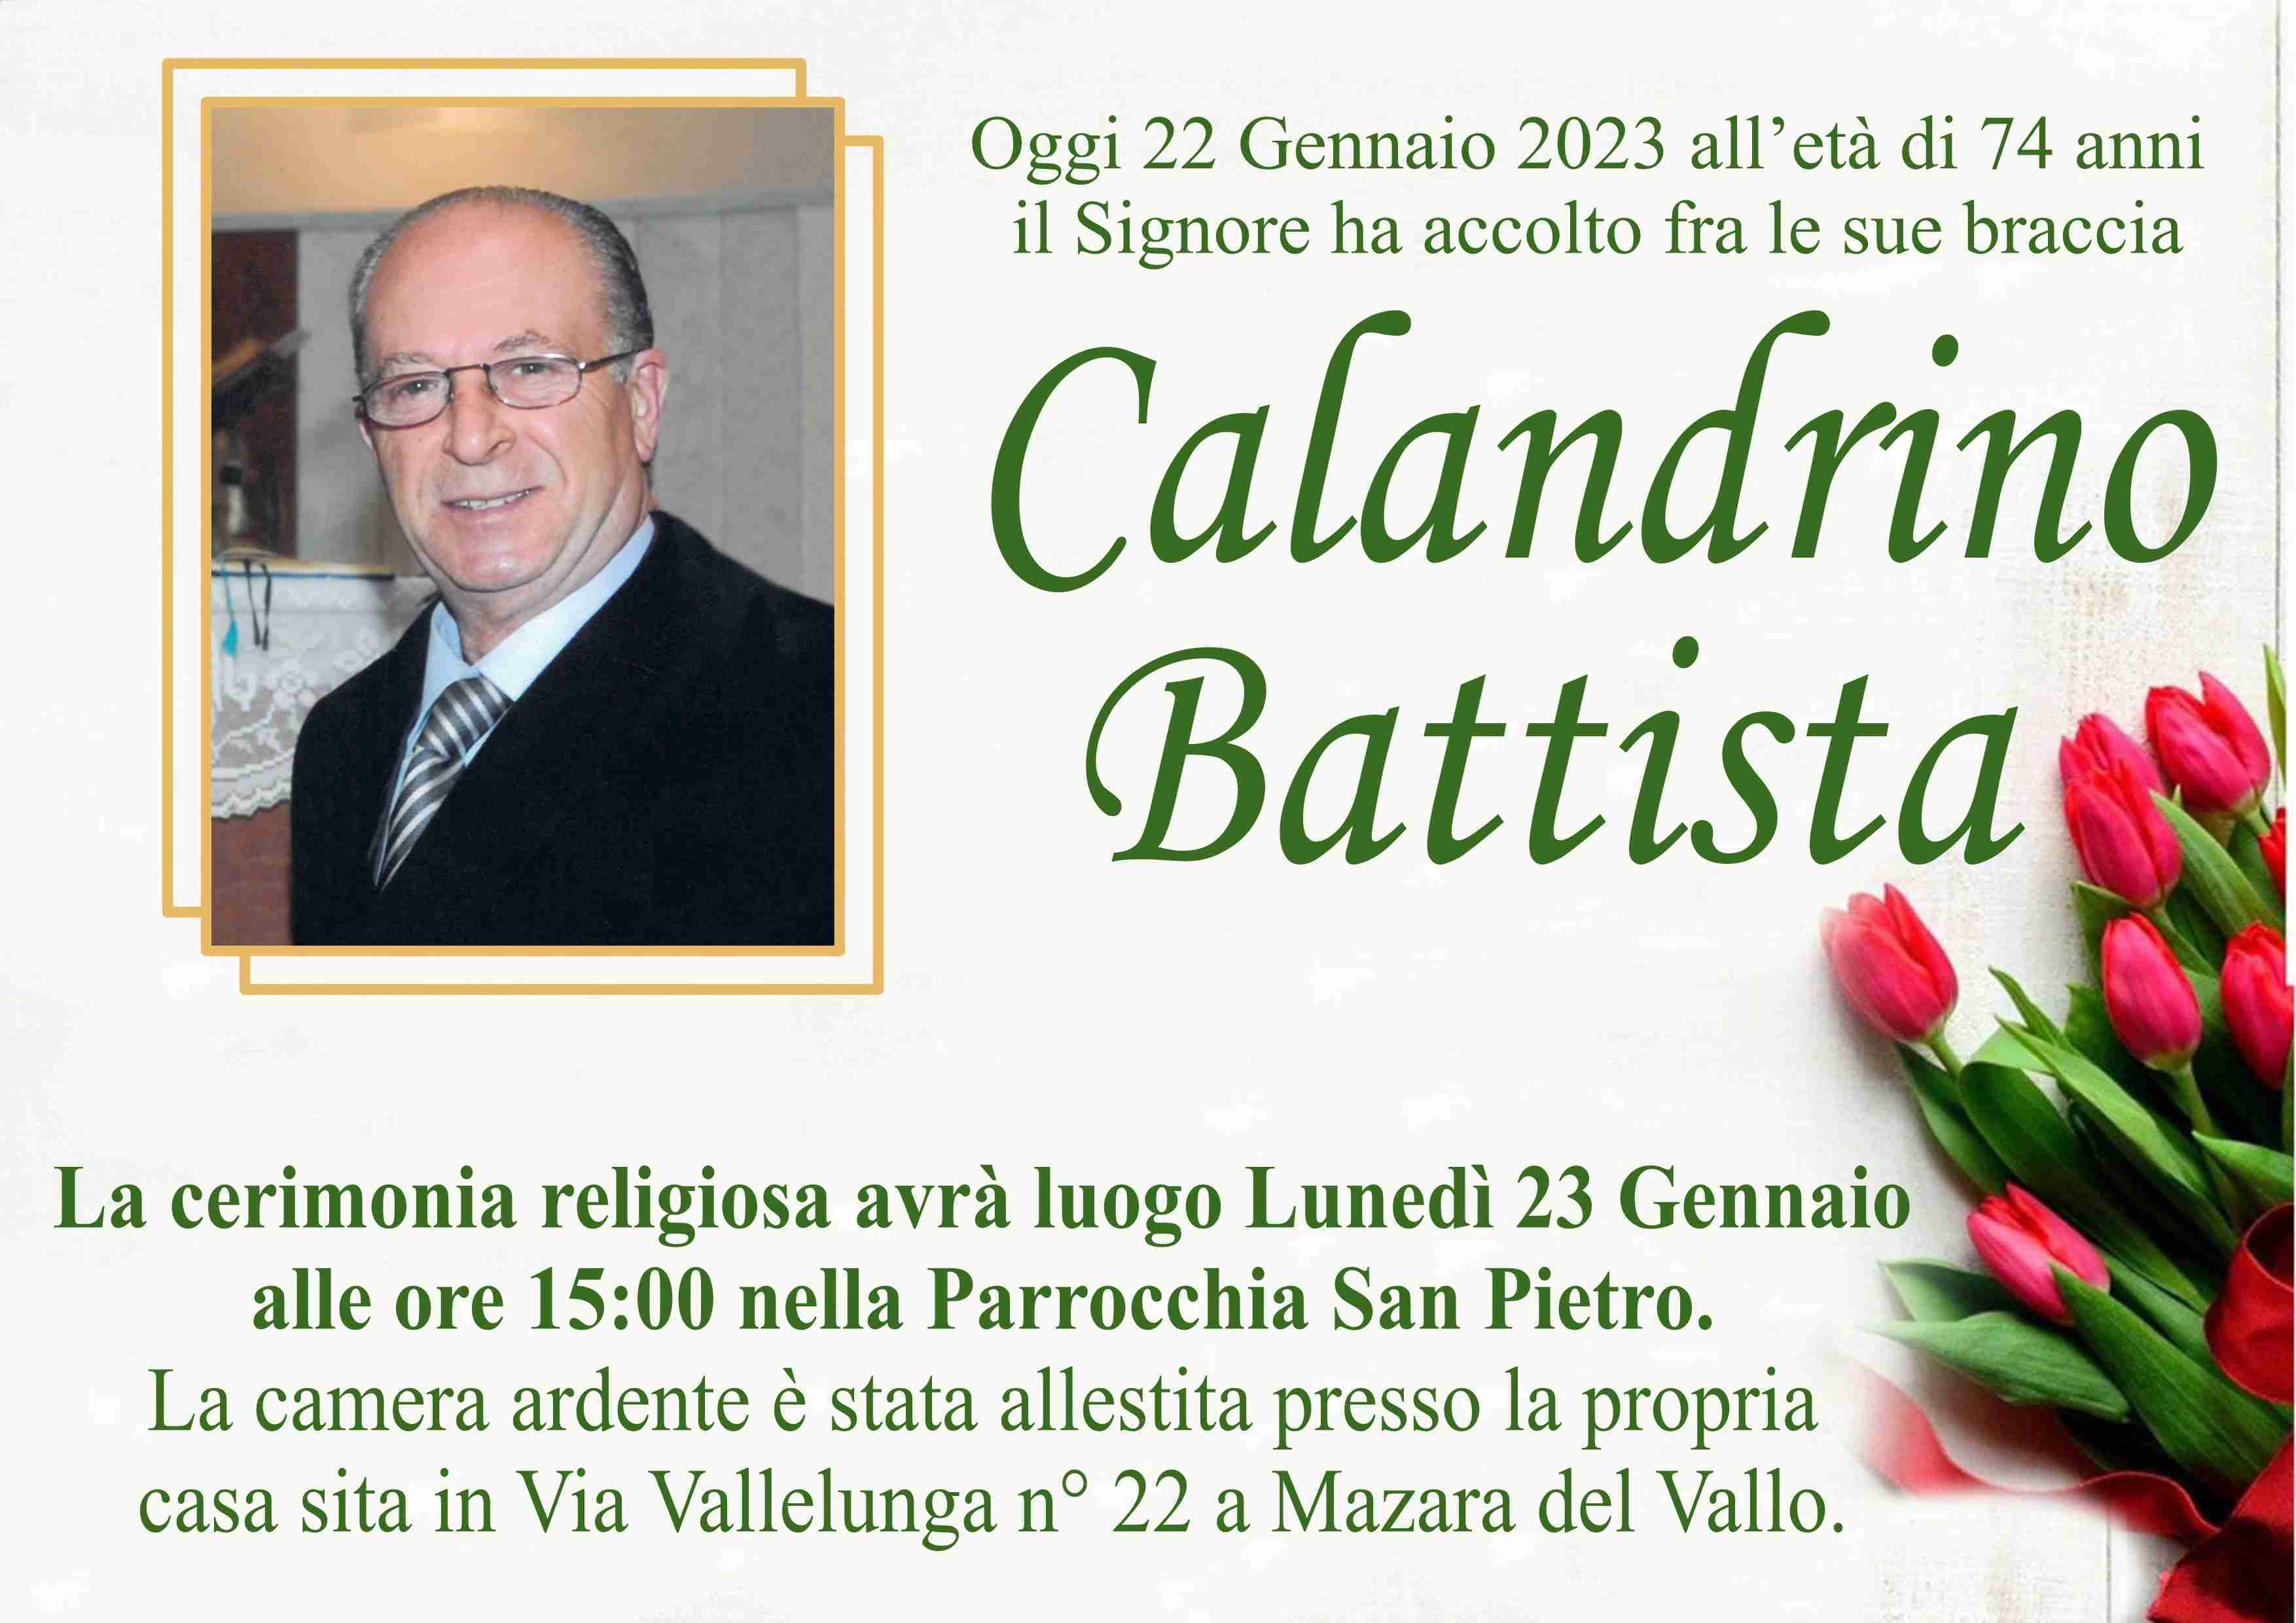 Battista Calandrino